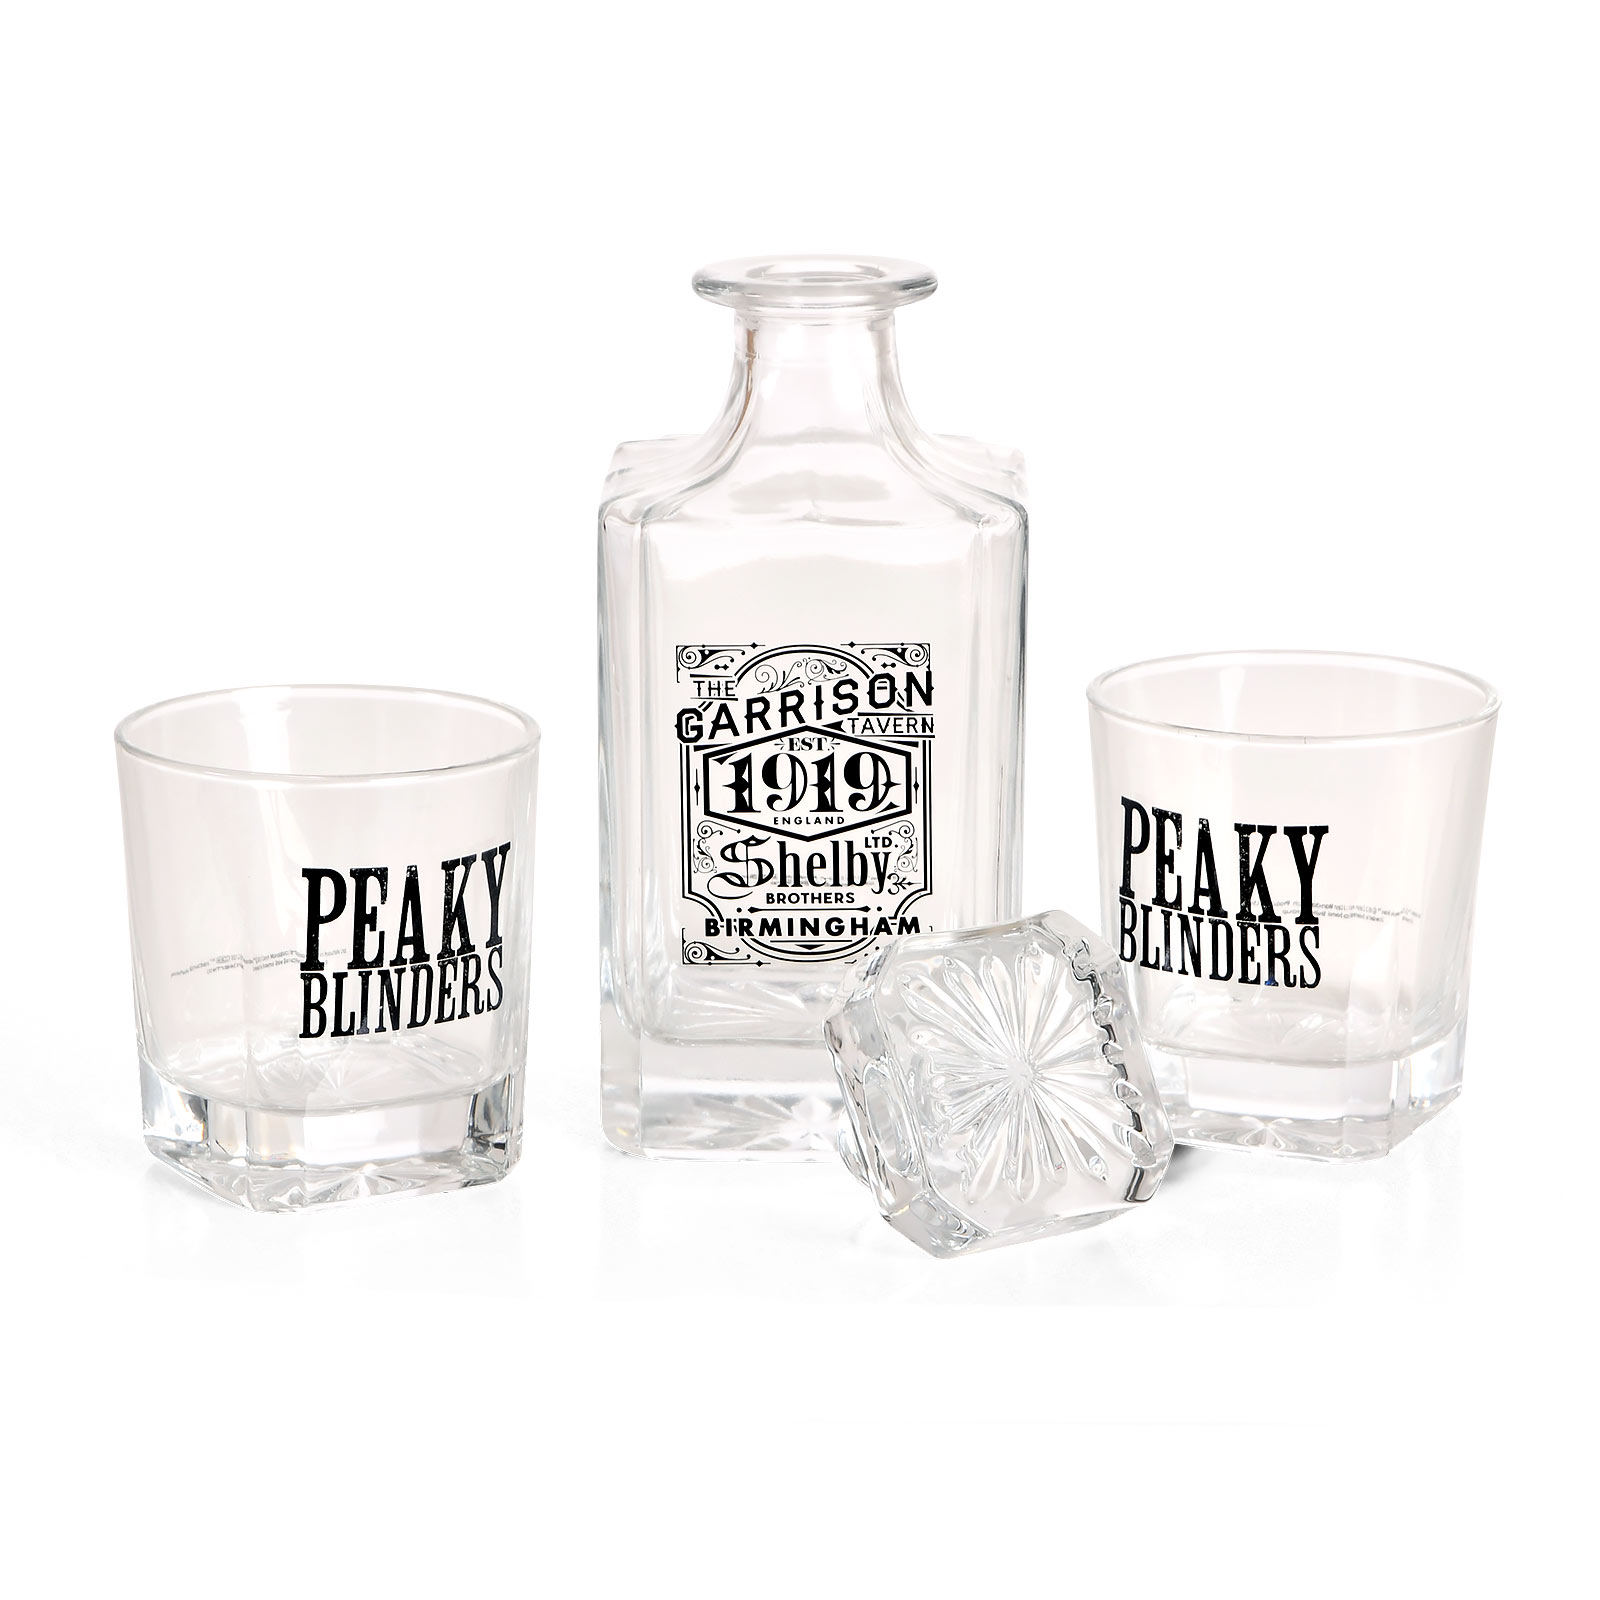 Peaky Blinders - Karaffe und Gläser Set